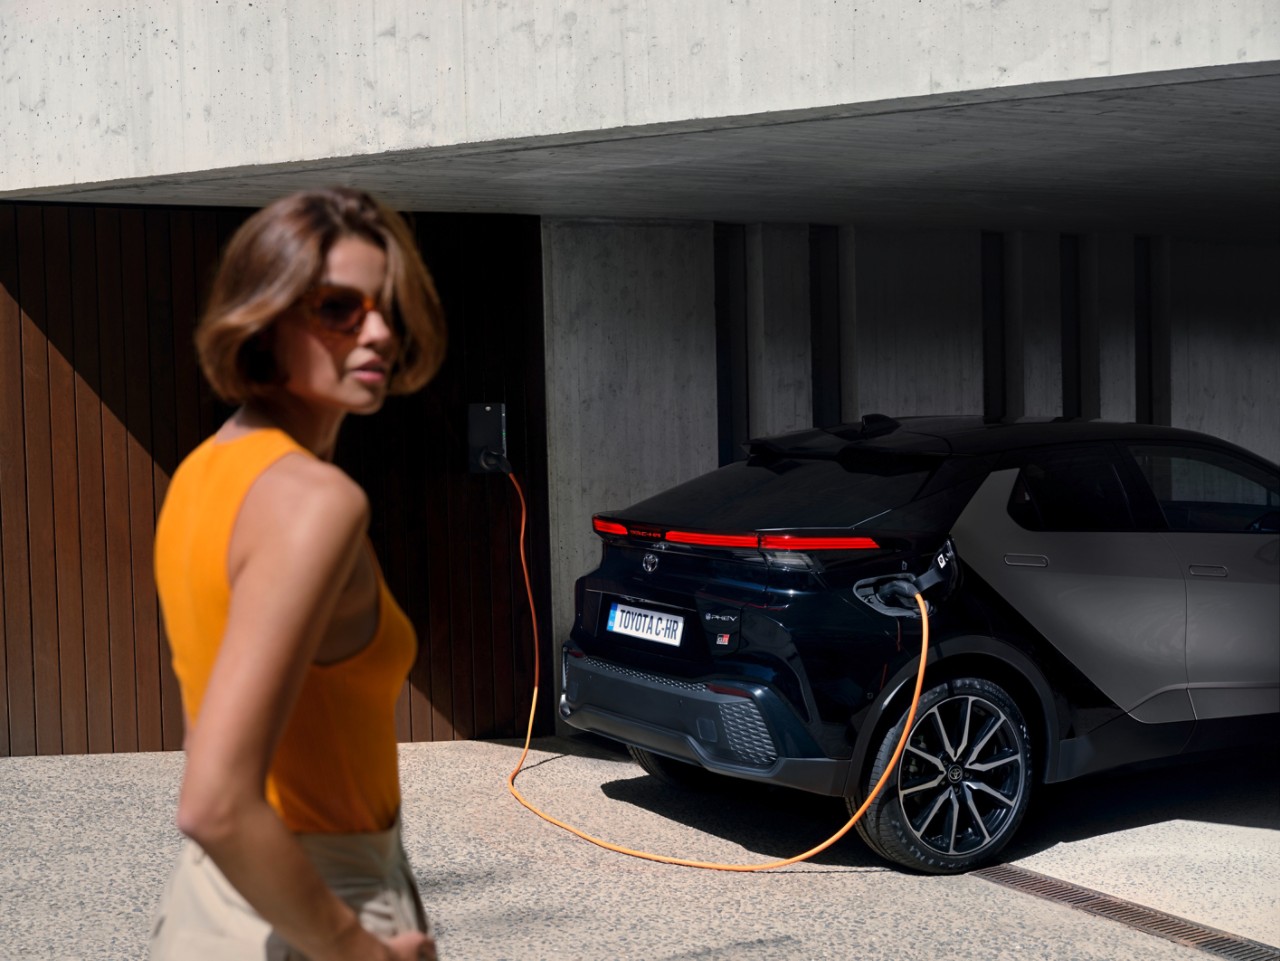 Charging electrified car